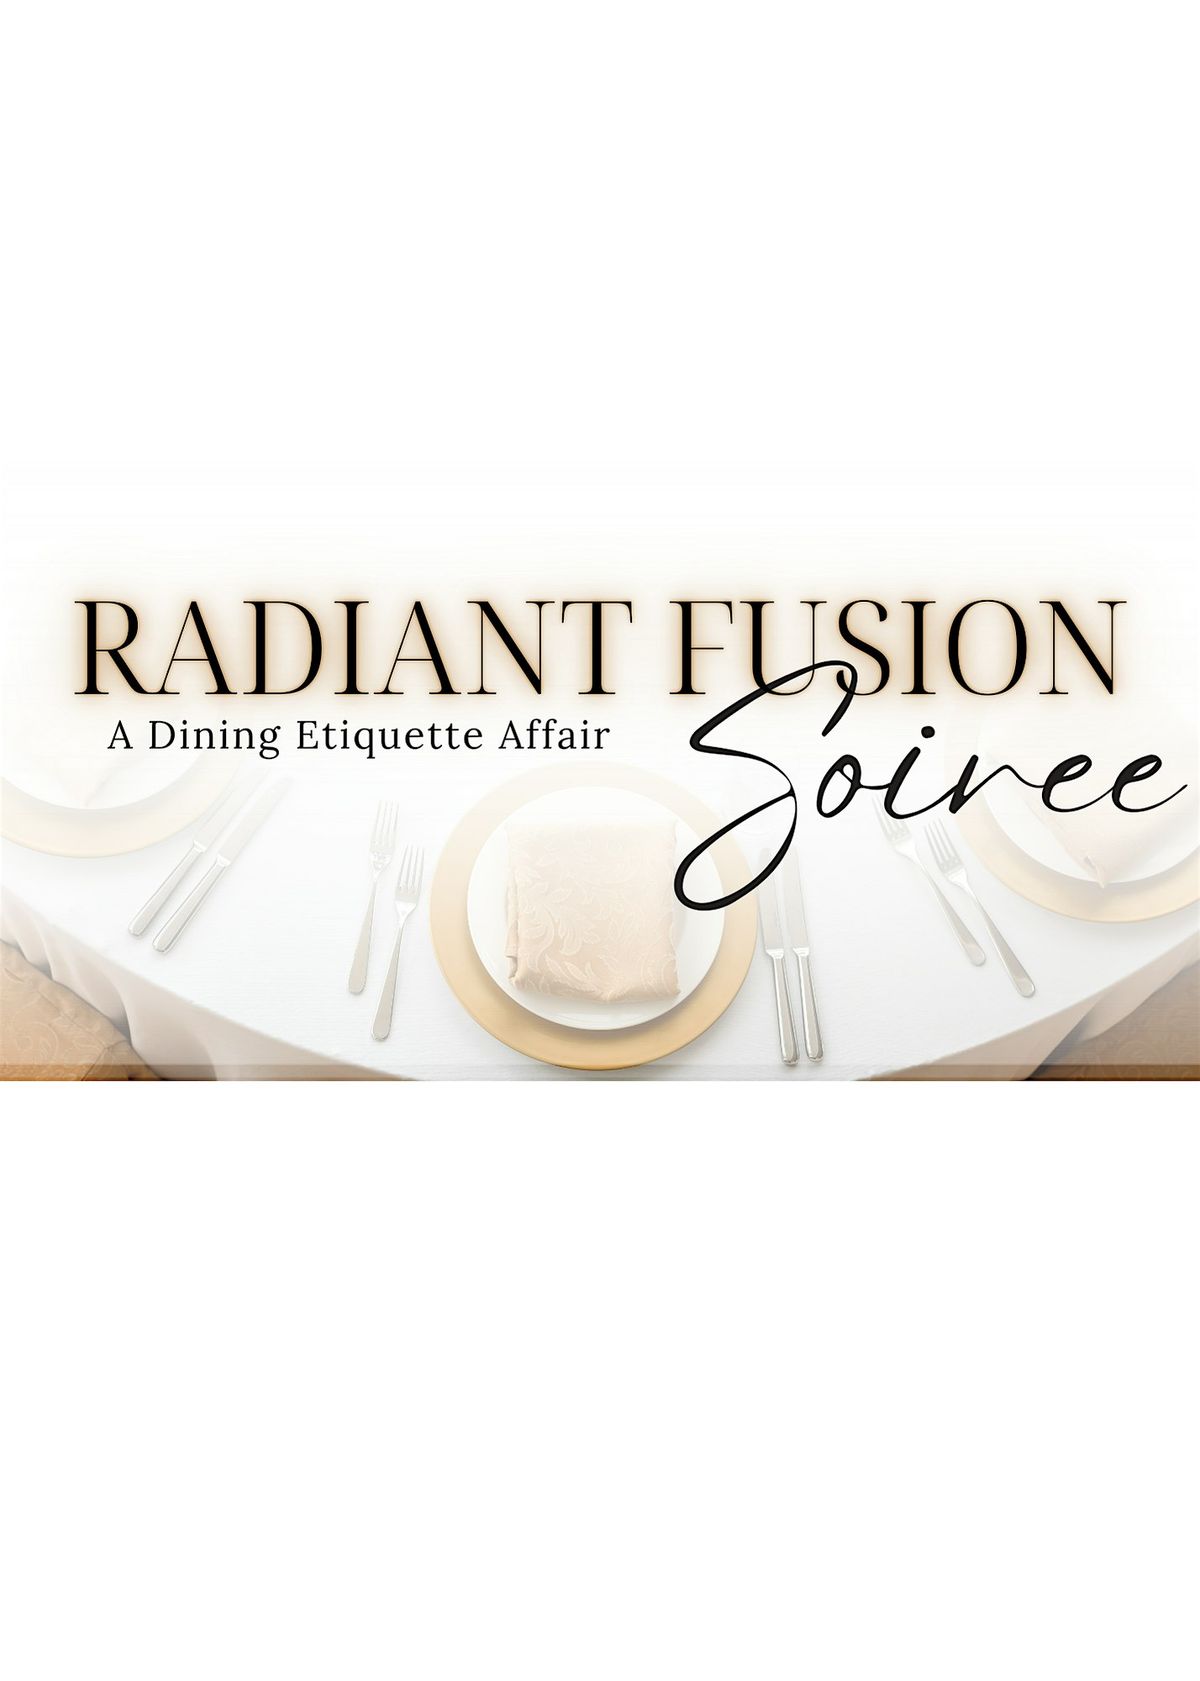 Radiant Fusion Soiree: A Dining Etiquette Affair